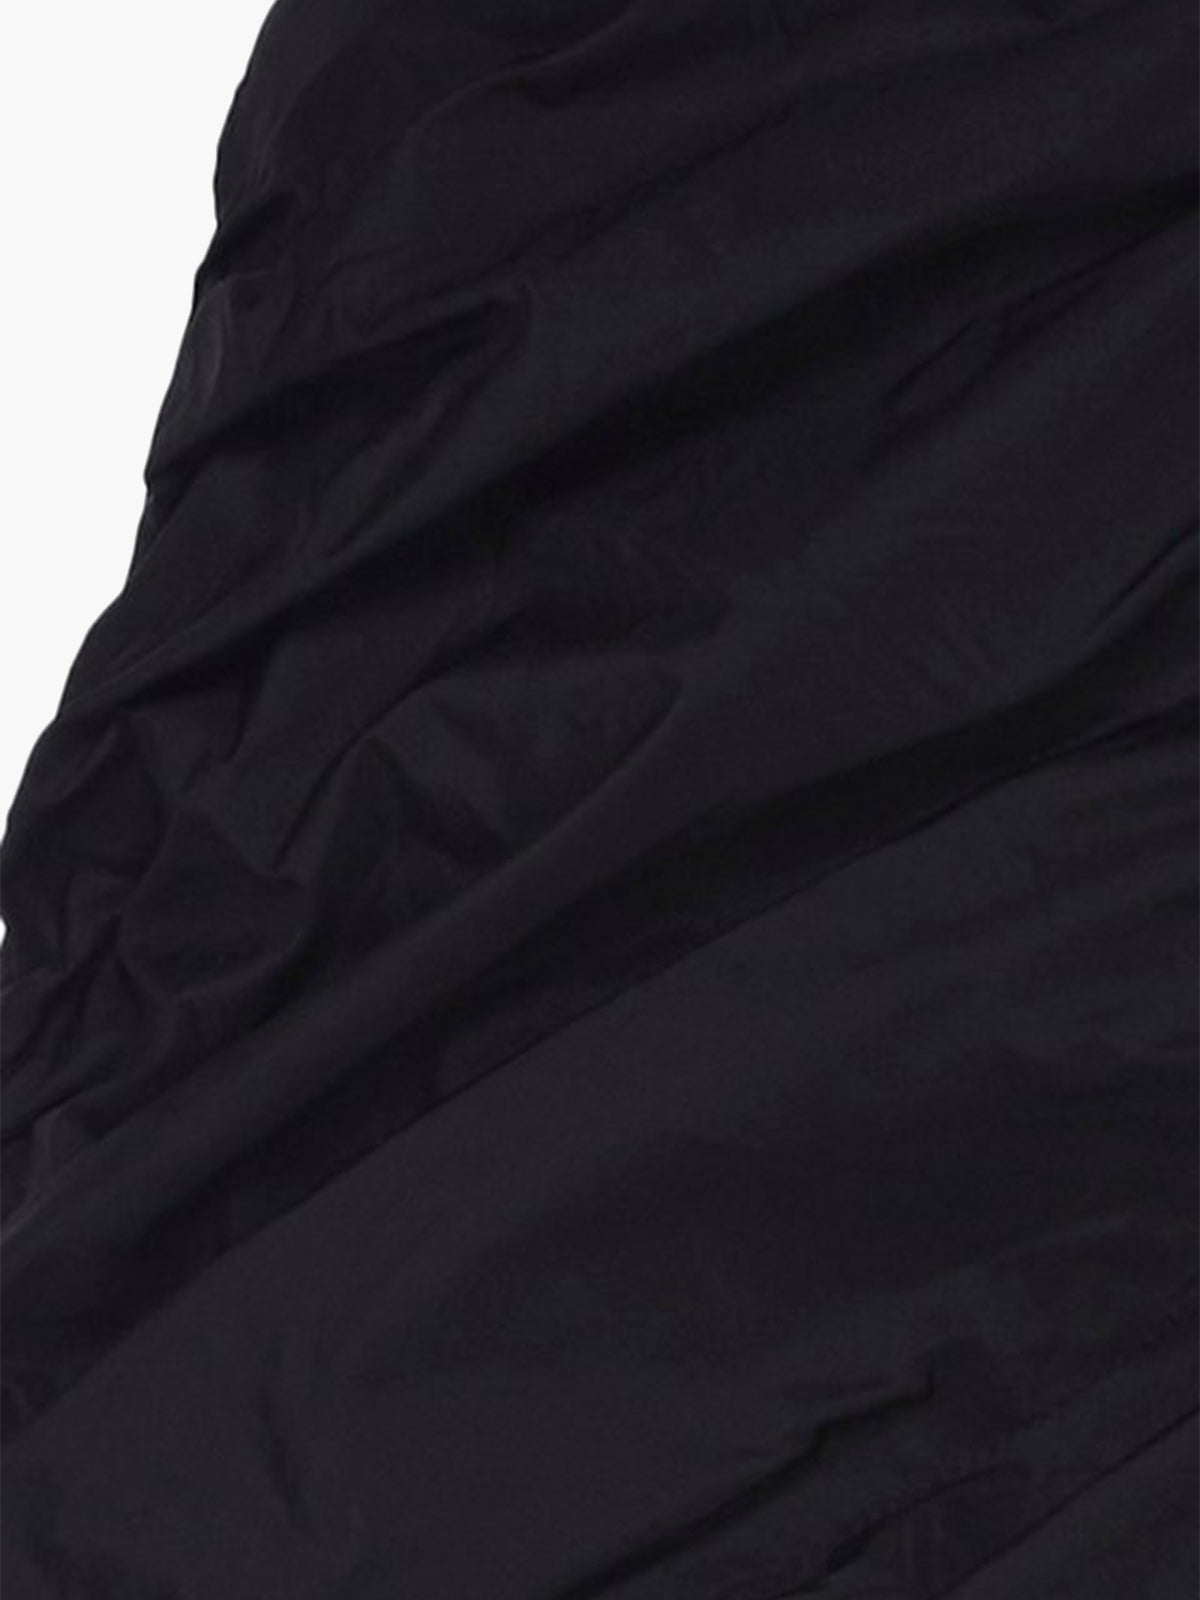 Casta Skirt | Black Casta Skirt | Black - Fashionkind